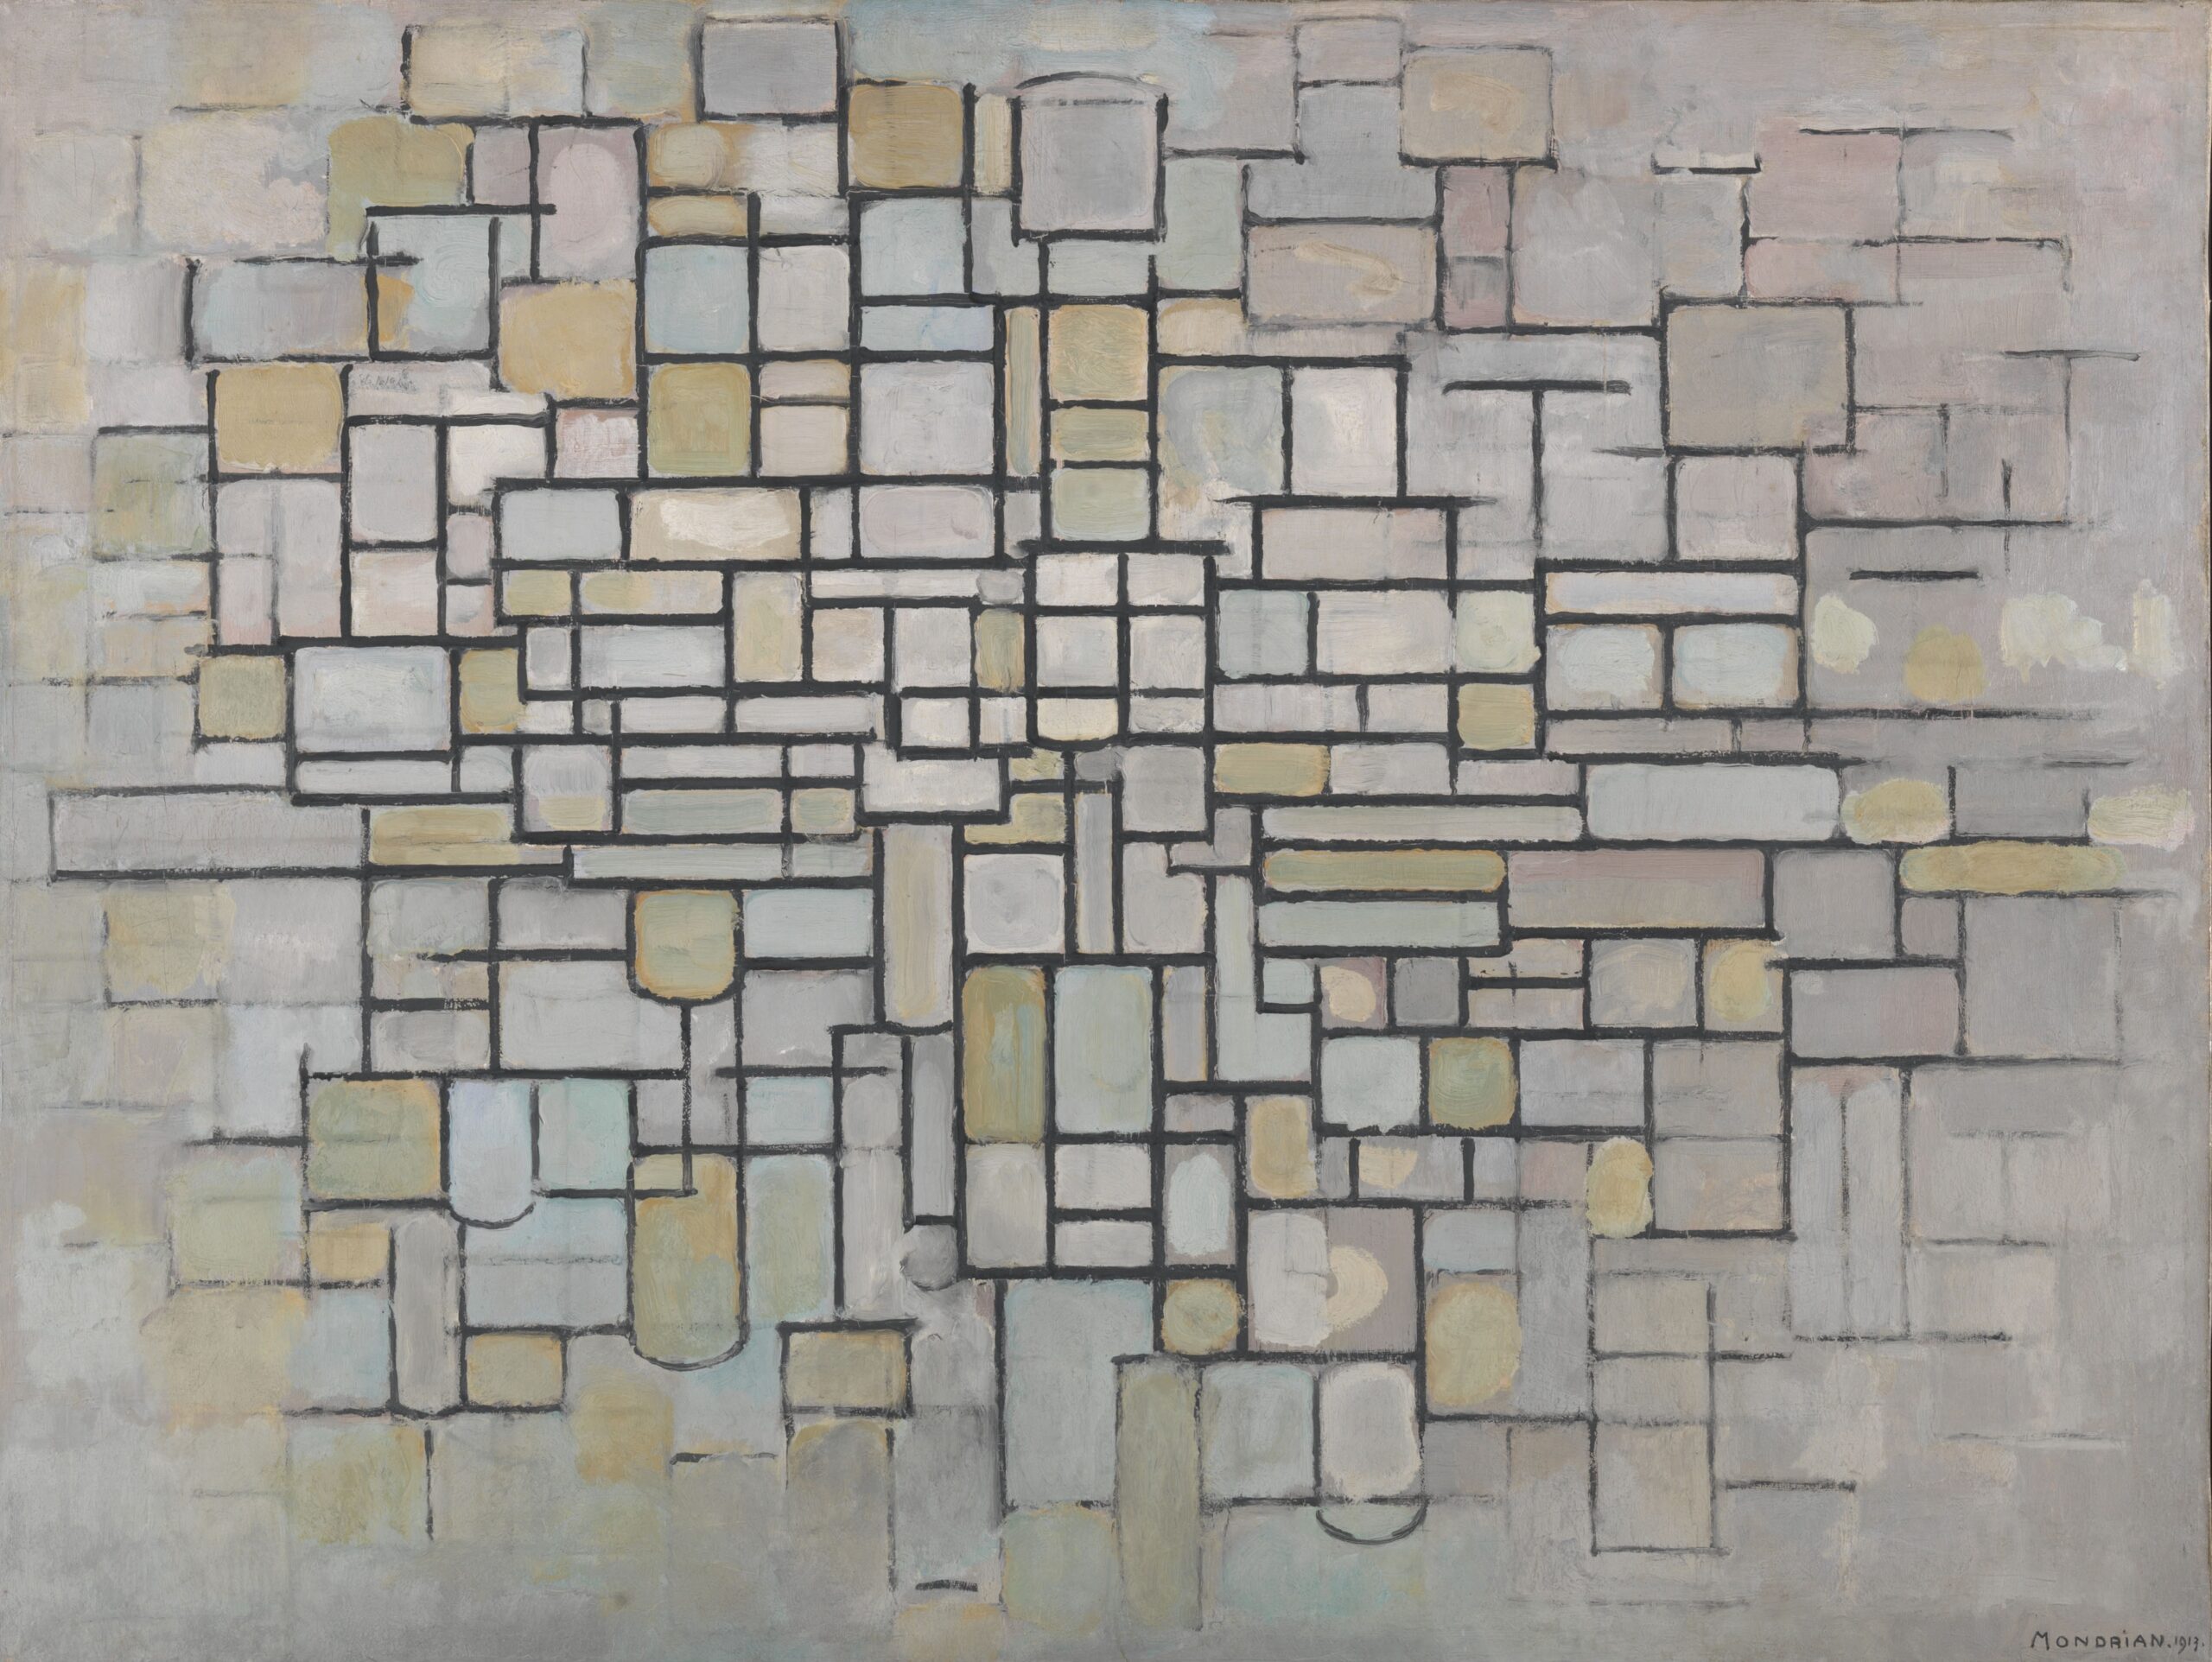 Dai paesaggi astratti alle geometrie spirituali: Mondrian in mostra al Museo Reina Sofia, Madrid